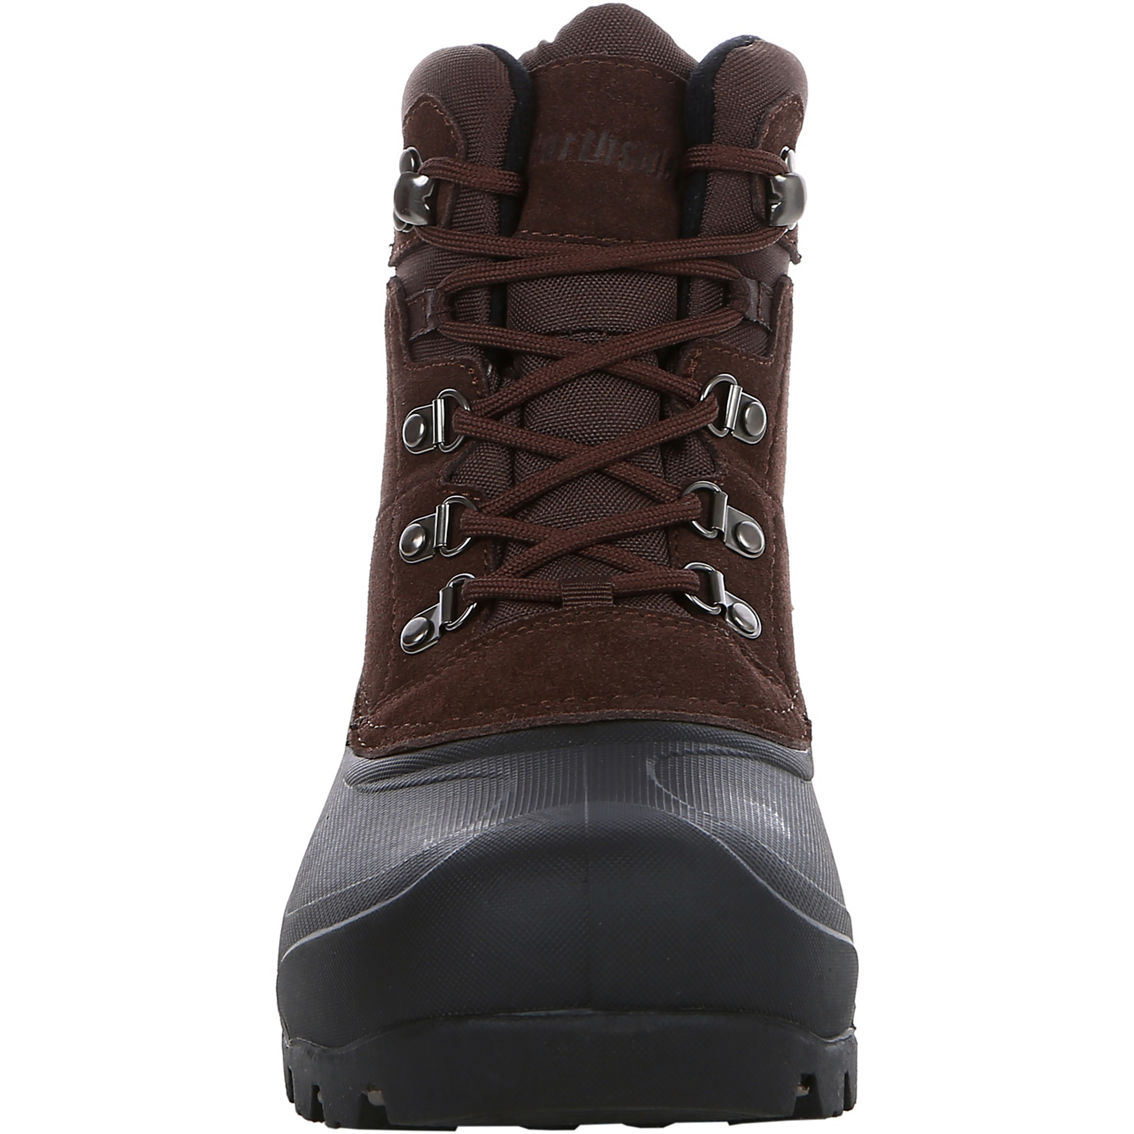 Northside Men's Tundra II Winter Boots - Image 5 of 6